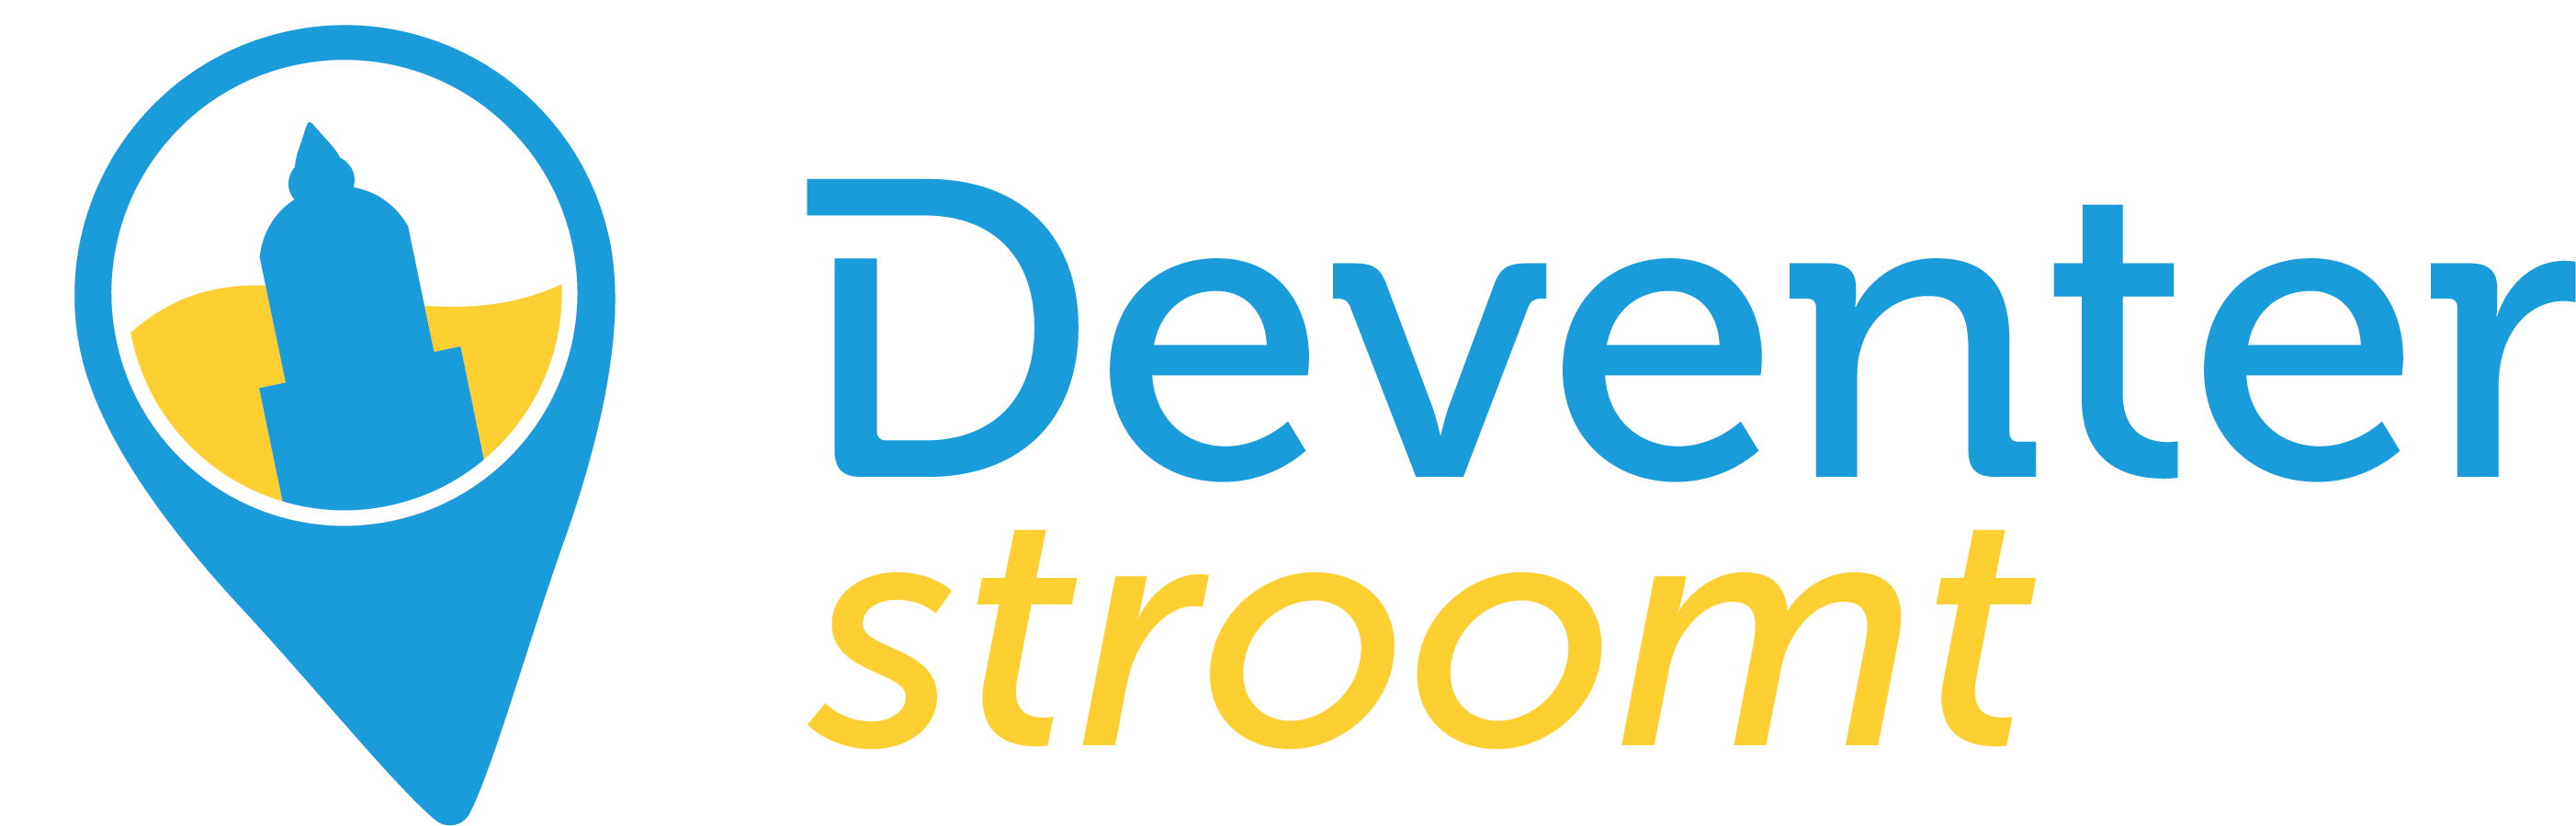 Deventer-Stroomt-logo